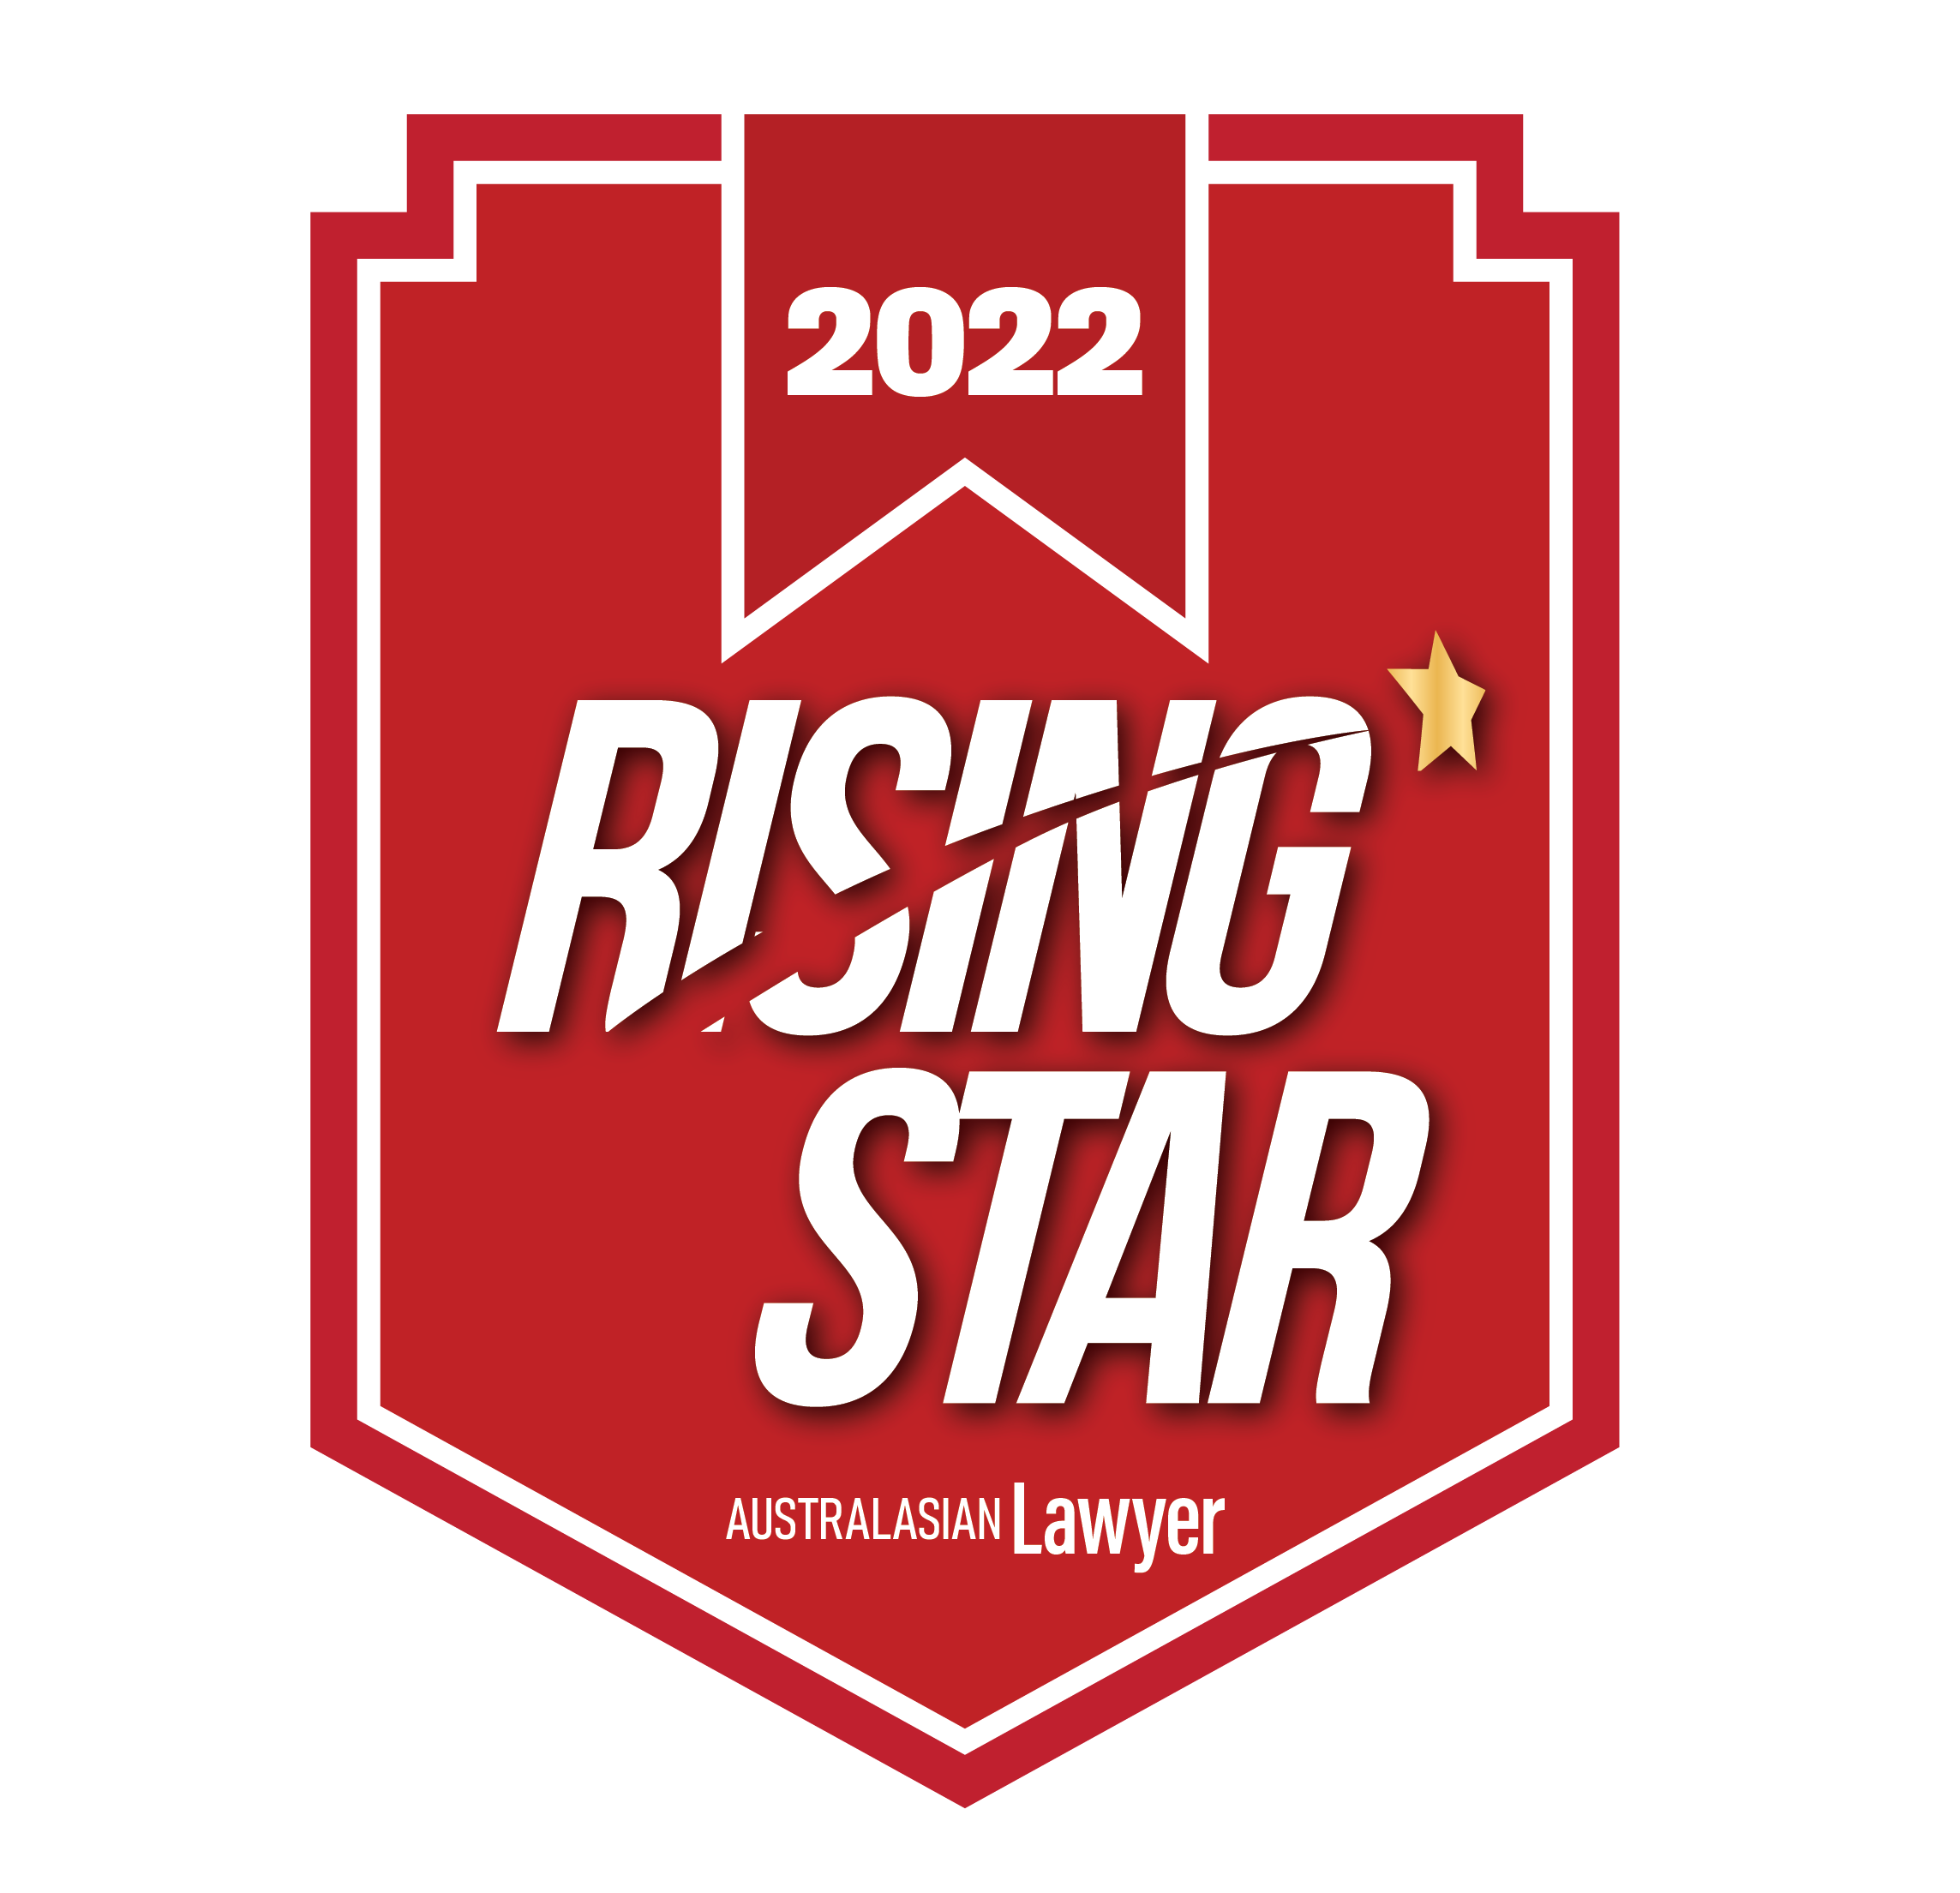 Australasian Lawyer - Rising Stars 2022 - Funda Karabacak